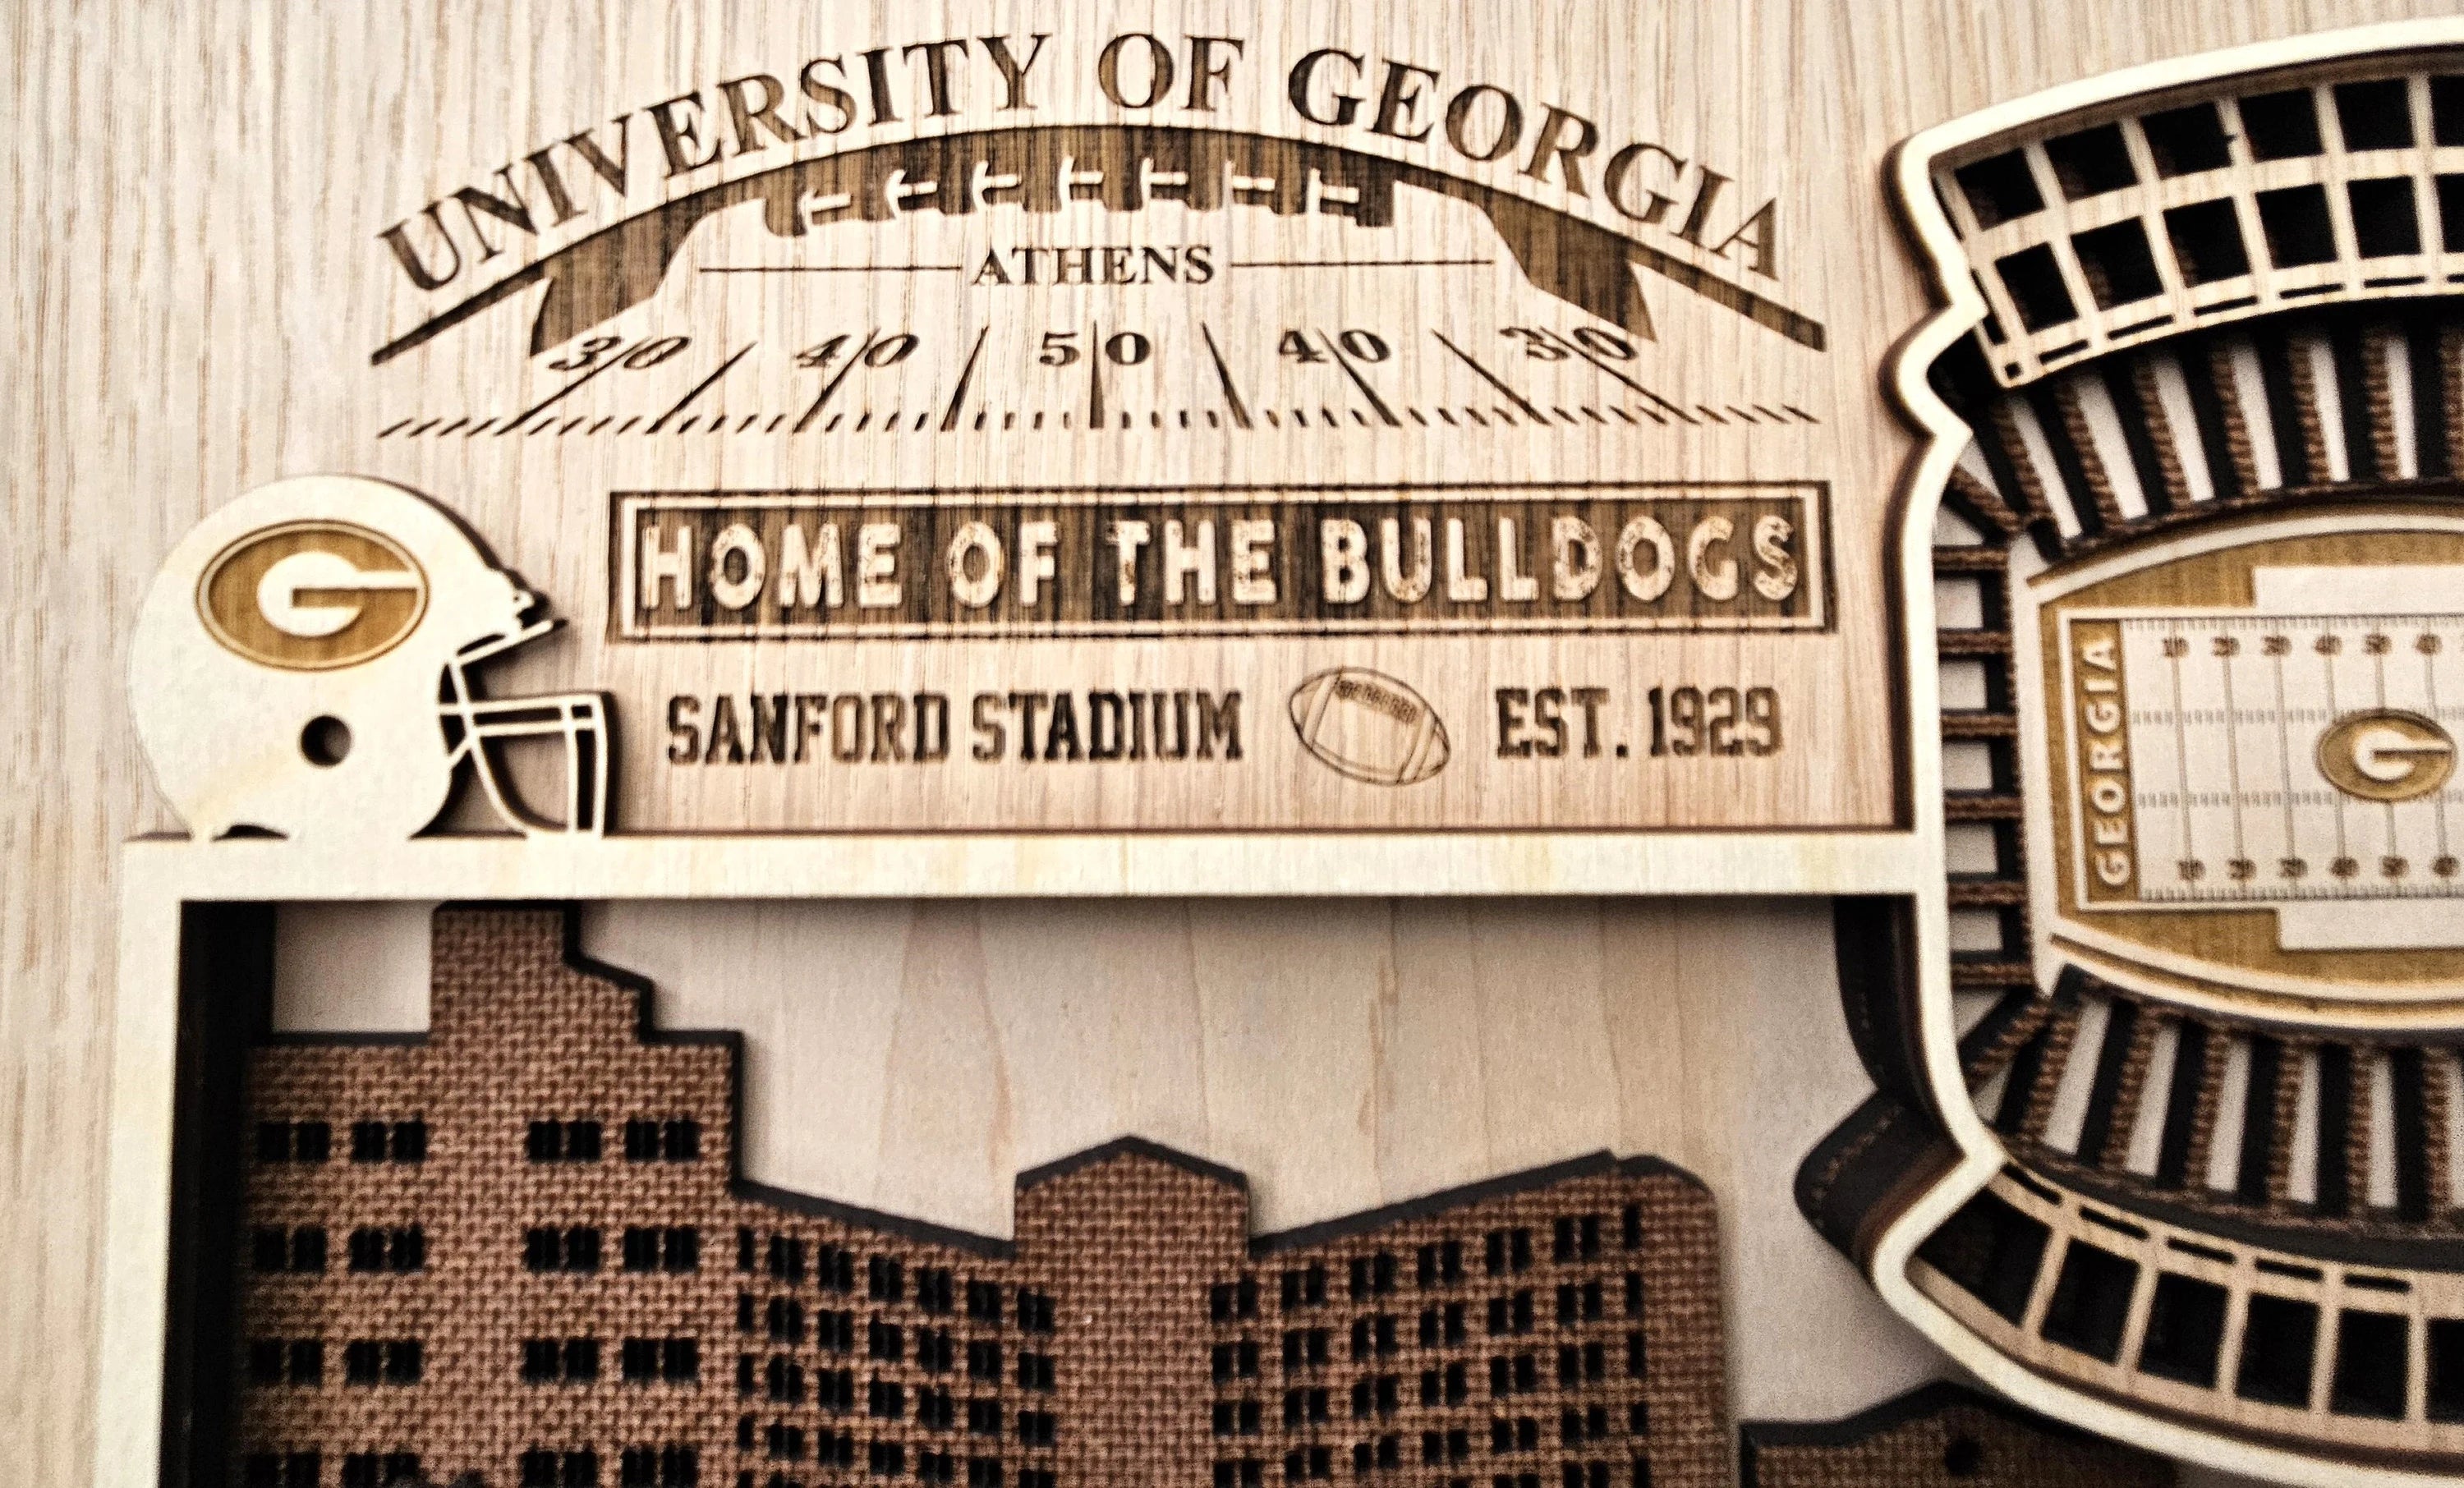 Sanford Stadium - Home of Georgia Bulldogs